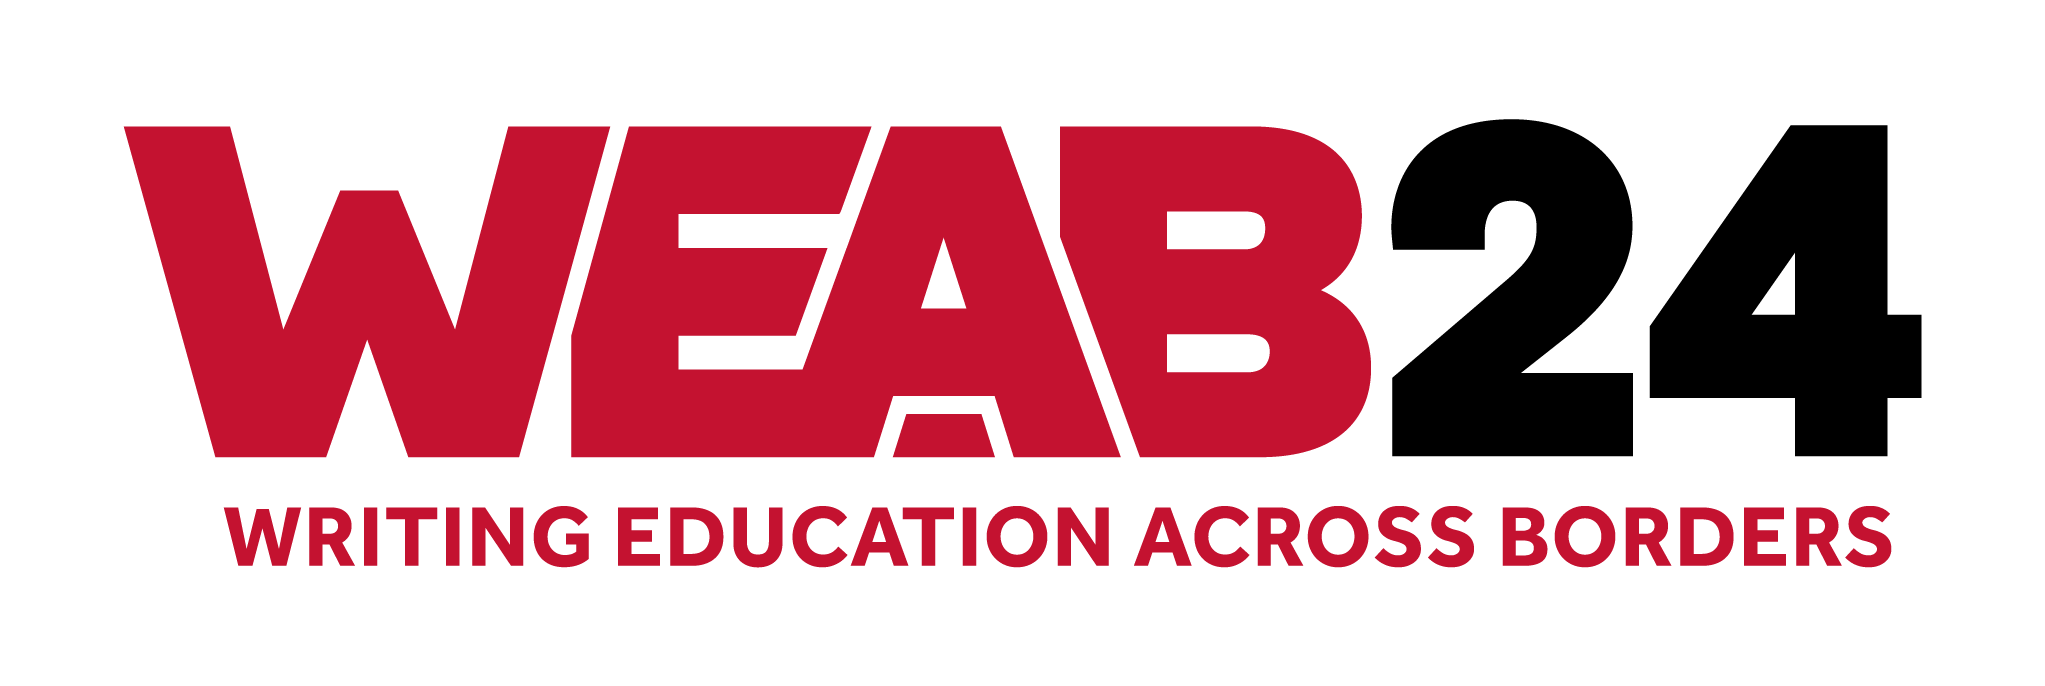 Writing Education Across Borders logo